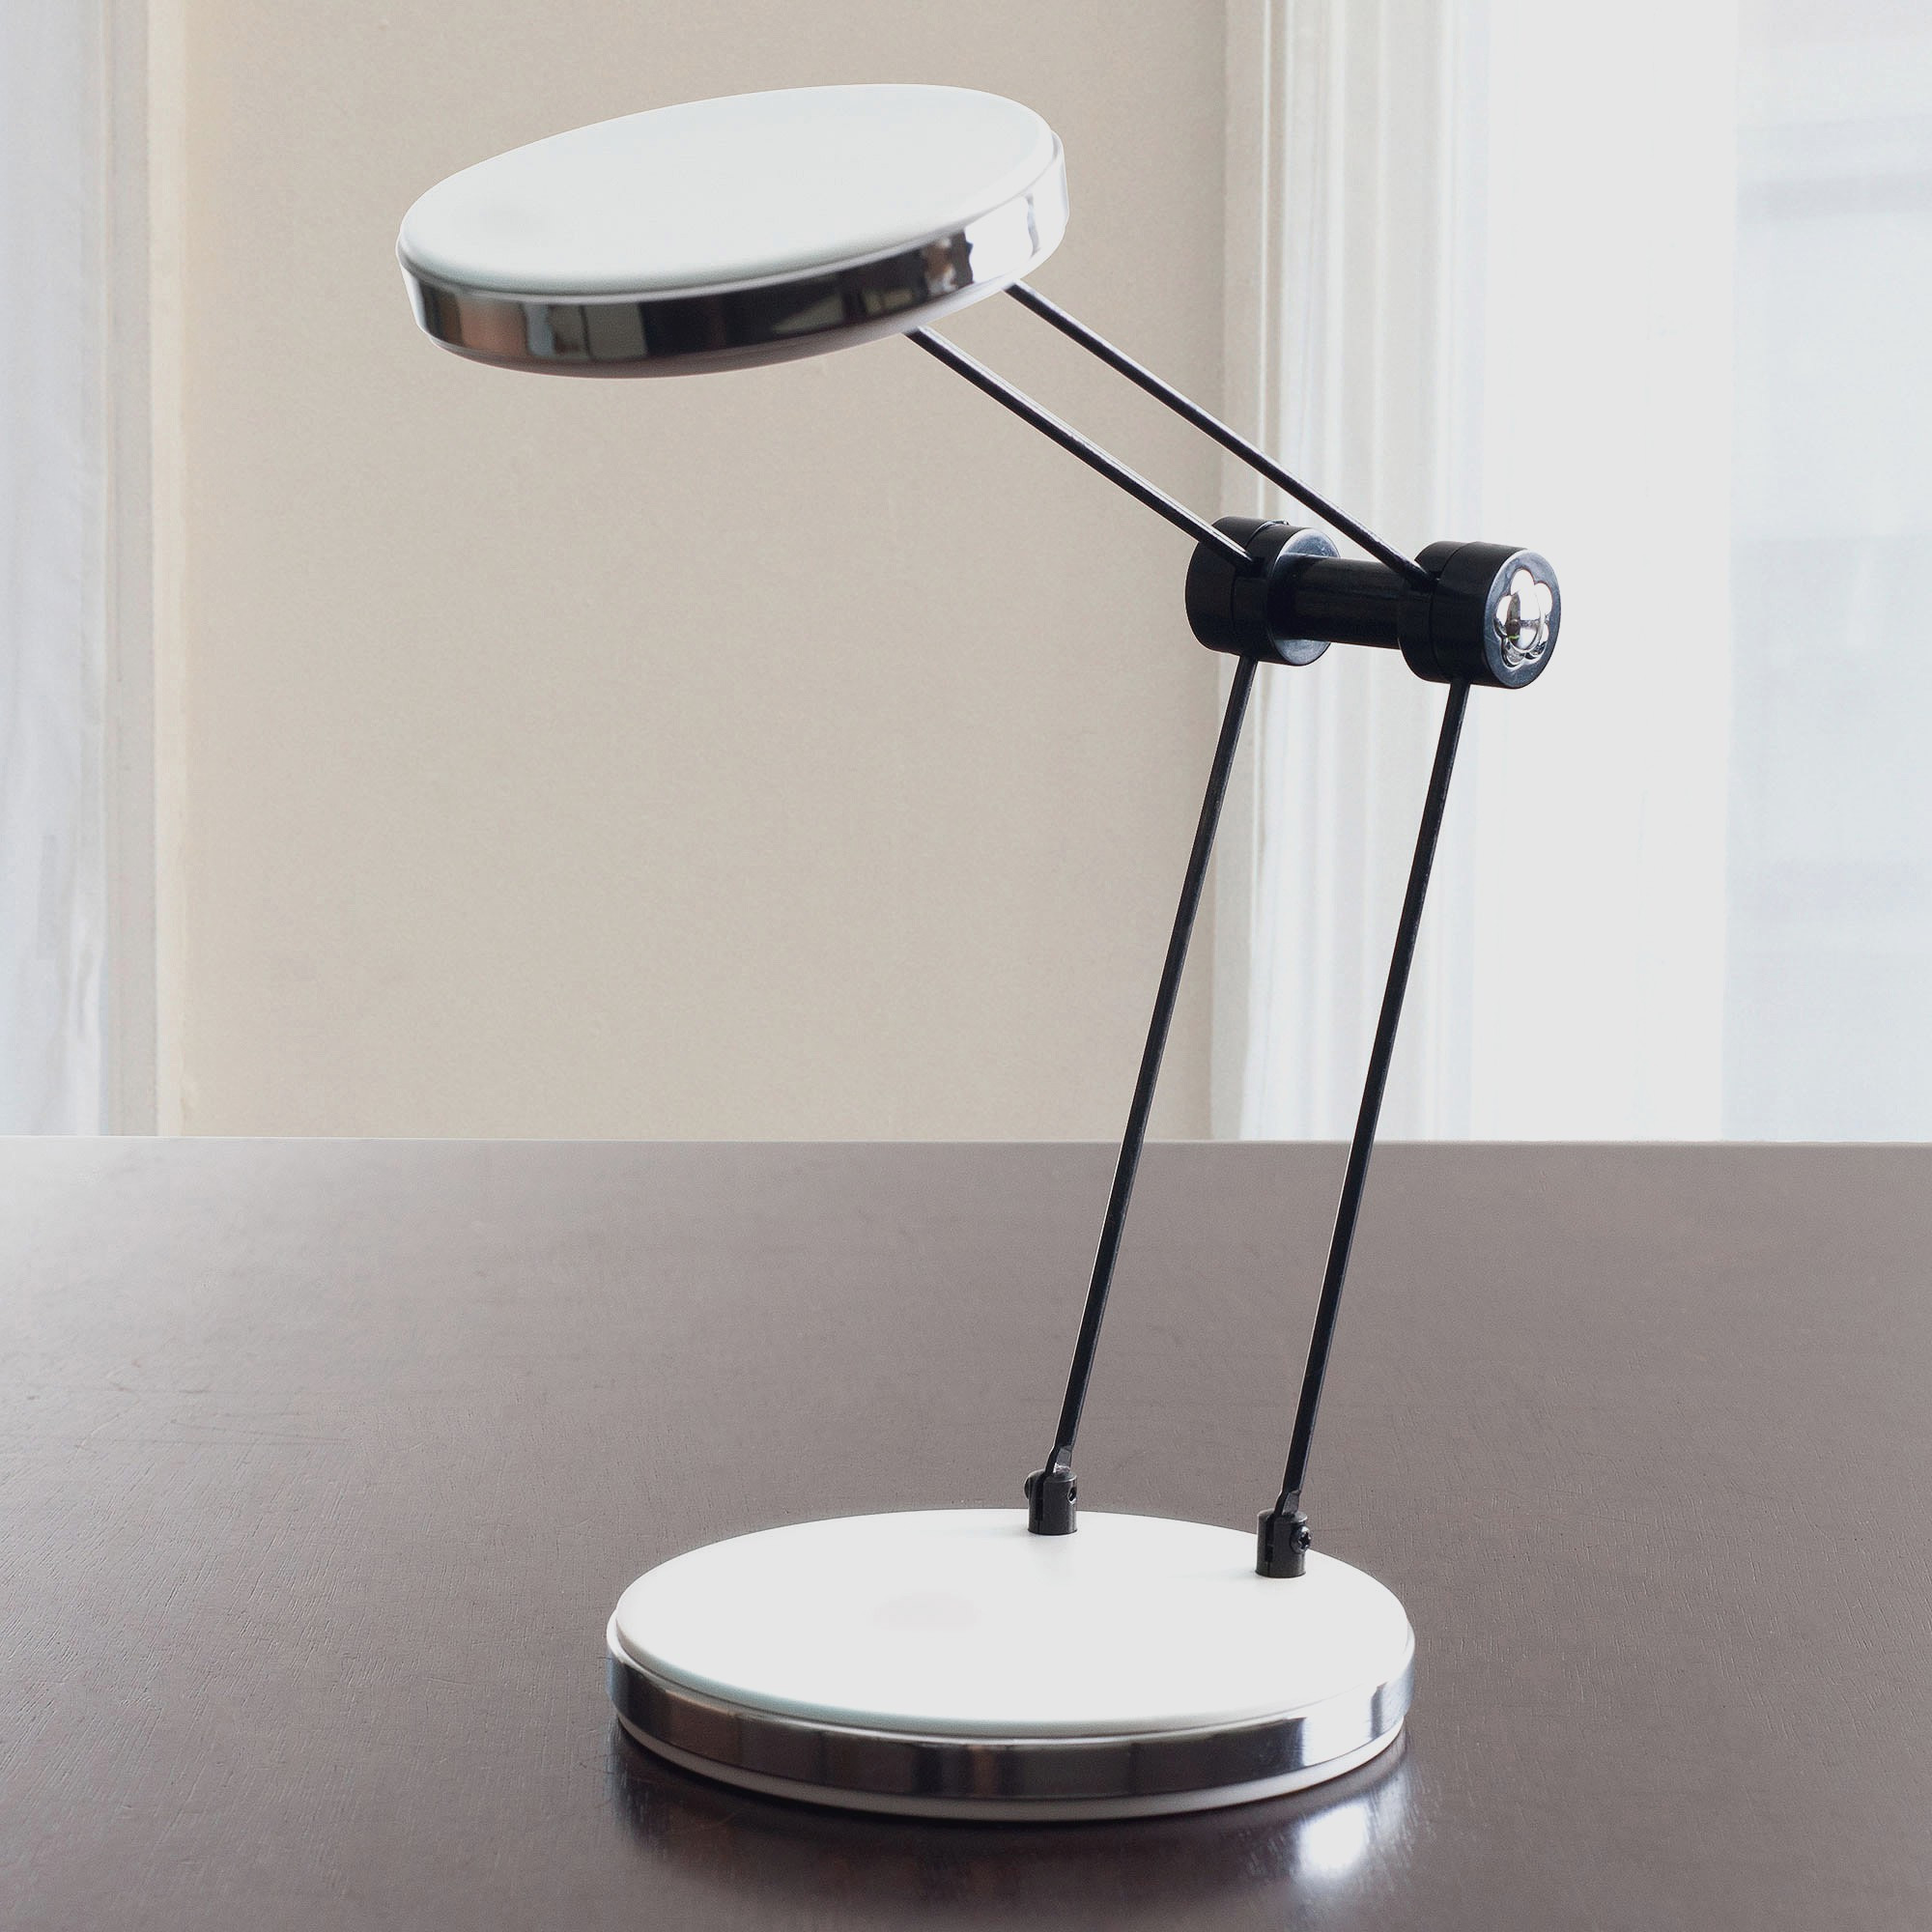 Best ideas about Walmart Desk Lamps
. Save or Pin Led Desk Lamp Neu Lavish Home Led Usb Foldable Desk Lamp Now.